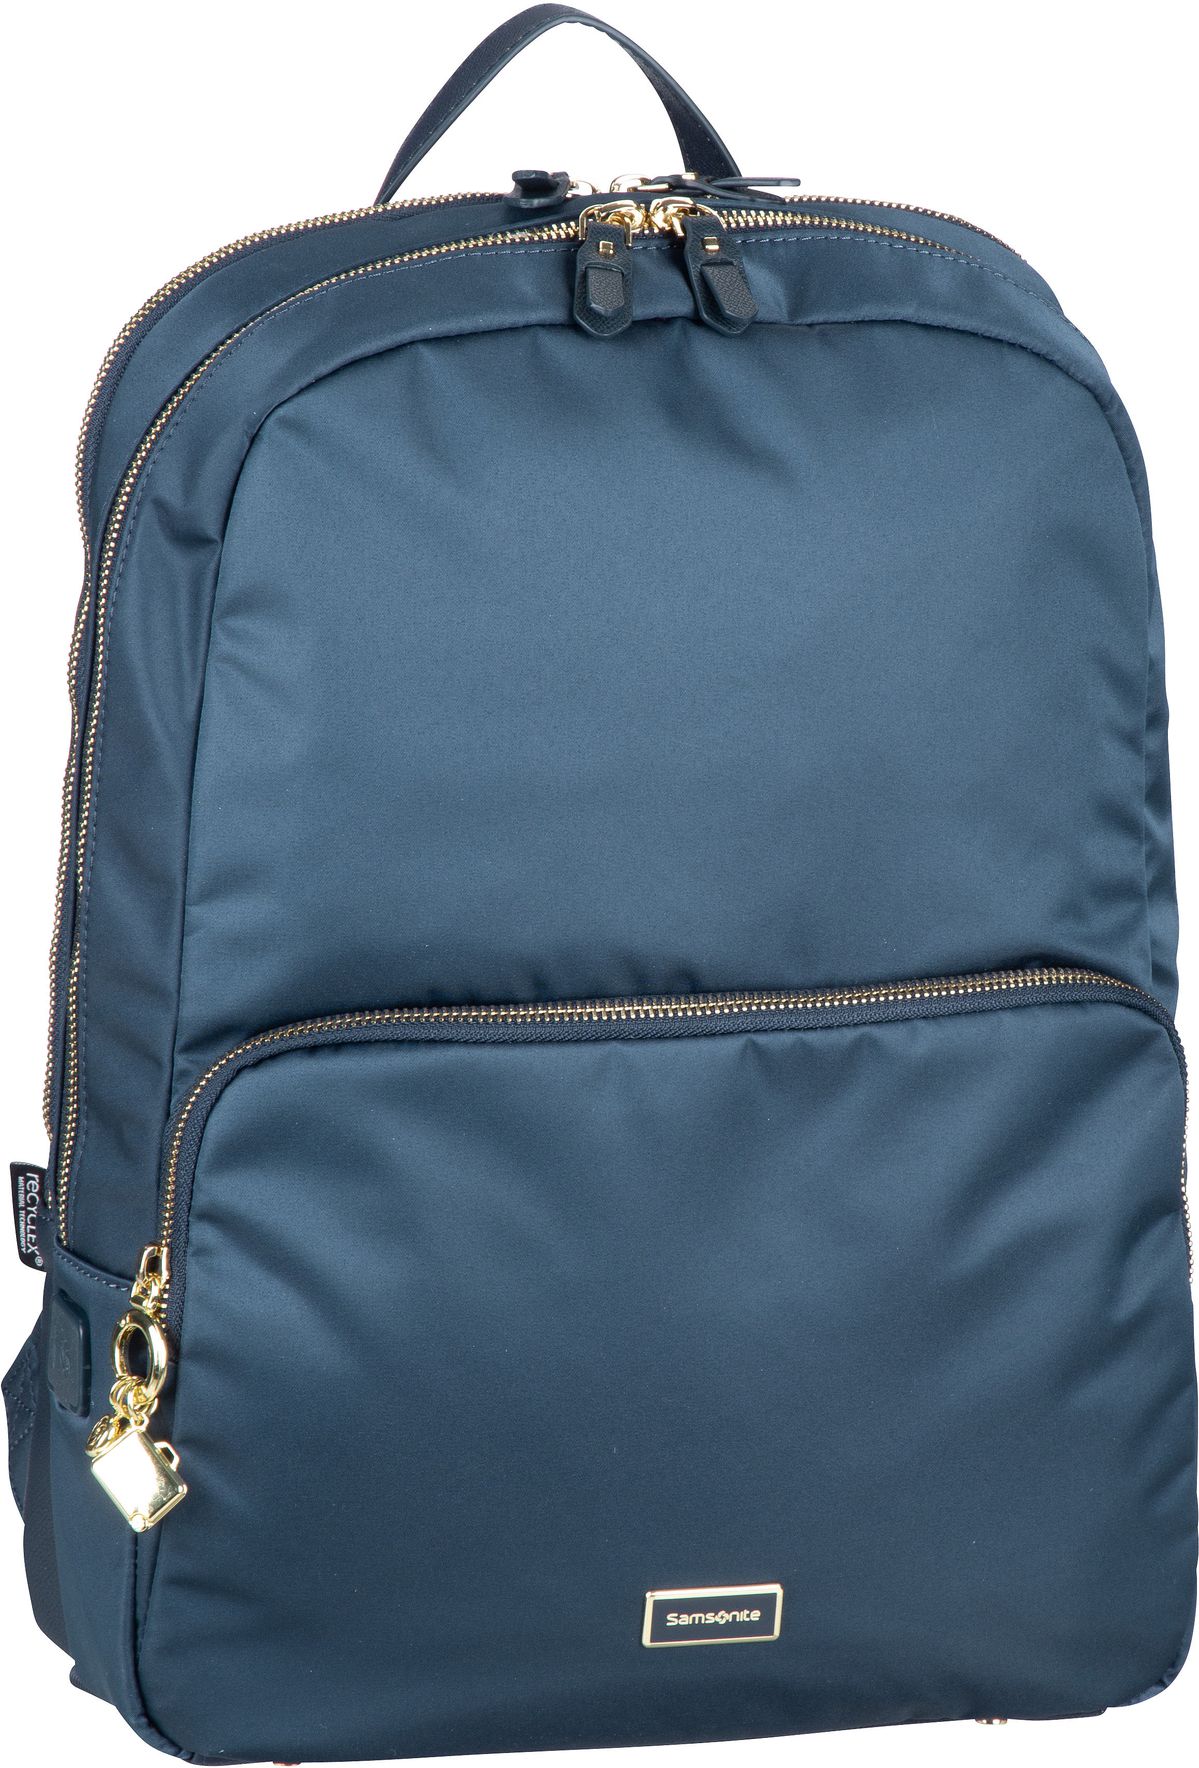 Samsonite Karissa Biz 2.0 Backpack 15.6'' - Midnight Blue